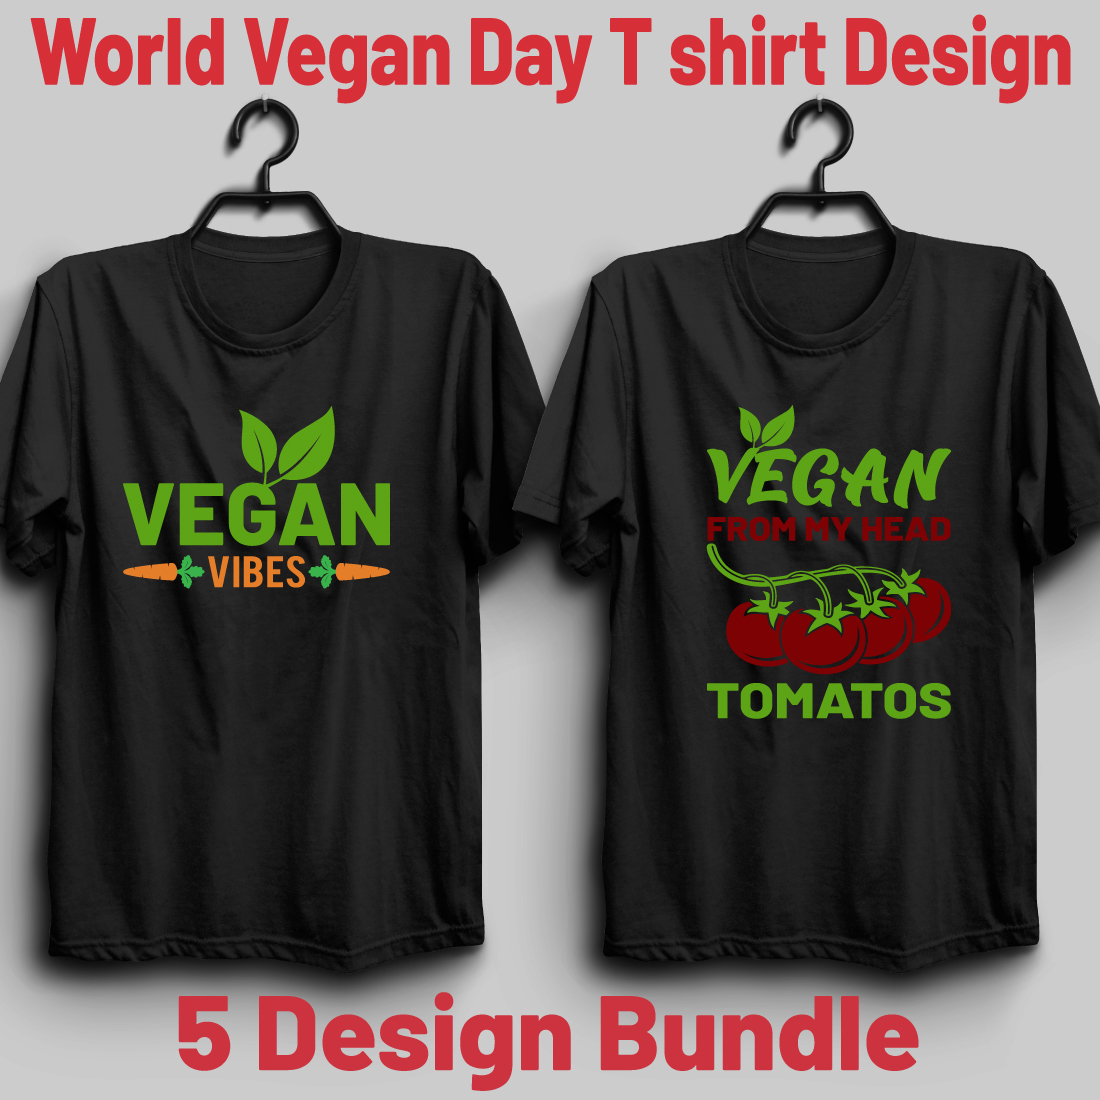 World Vegan Day T shirt Design Bundle cover image.